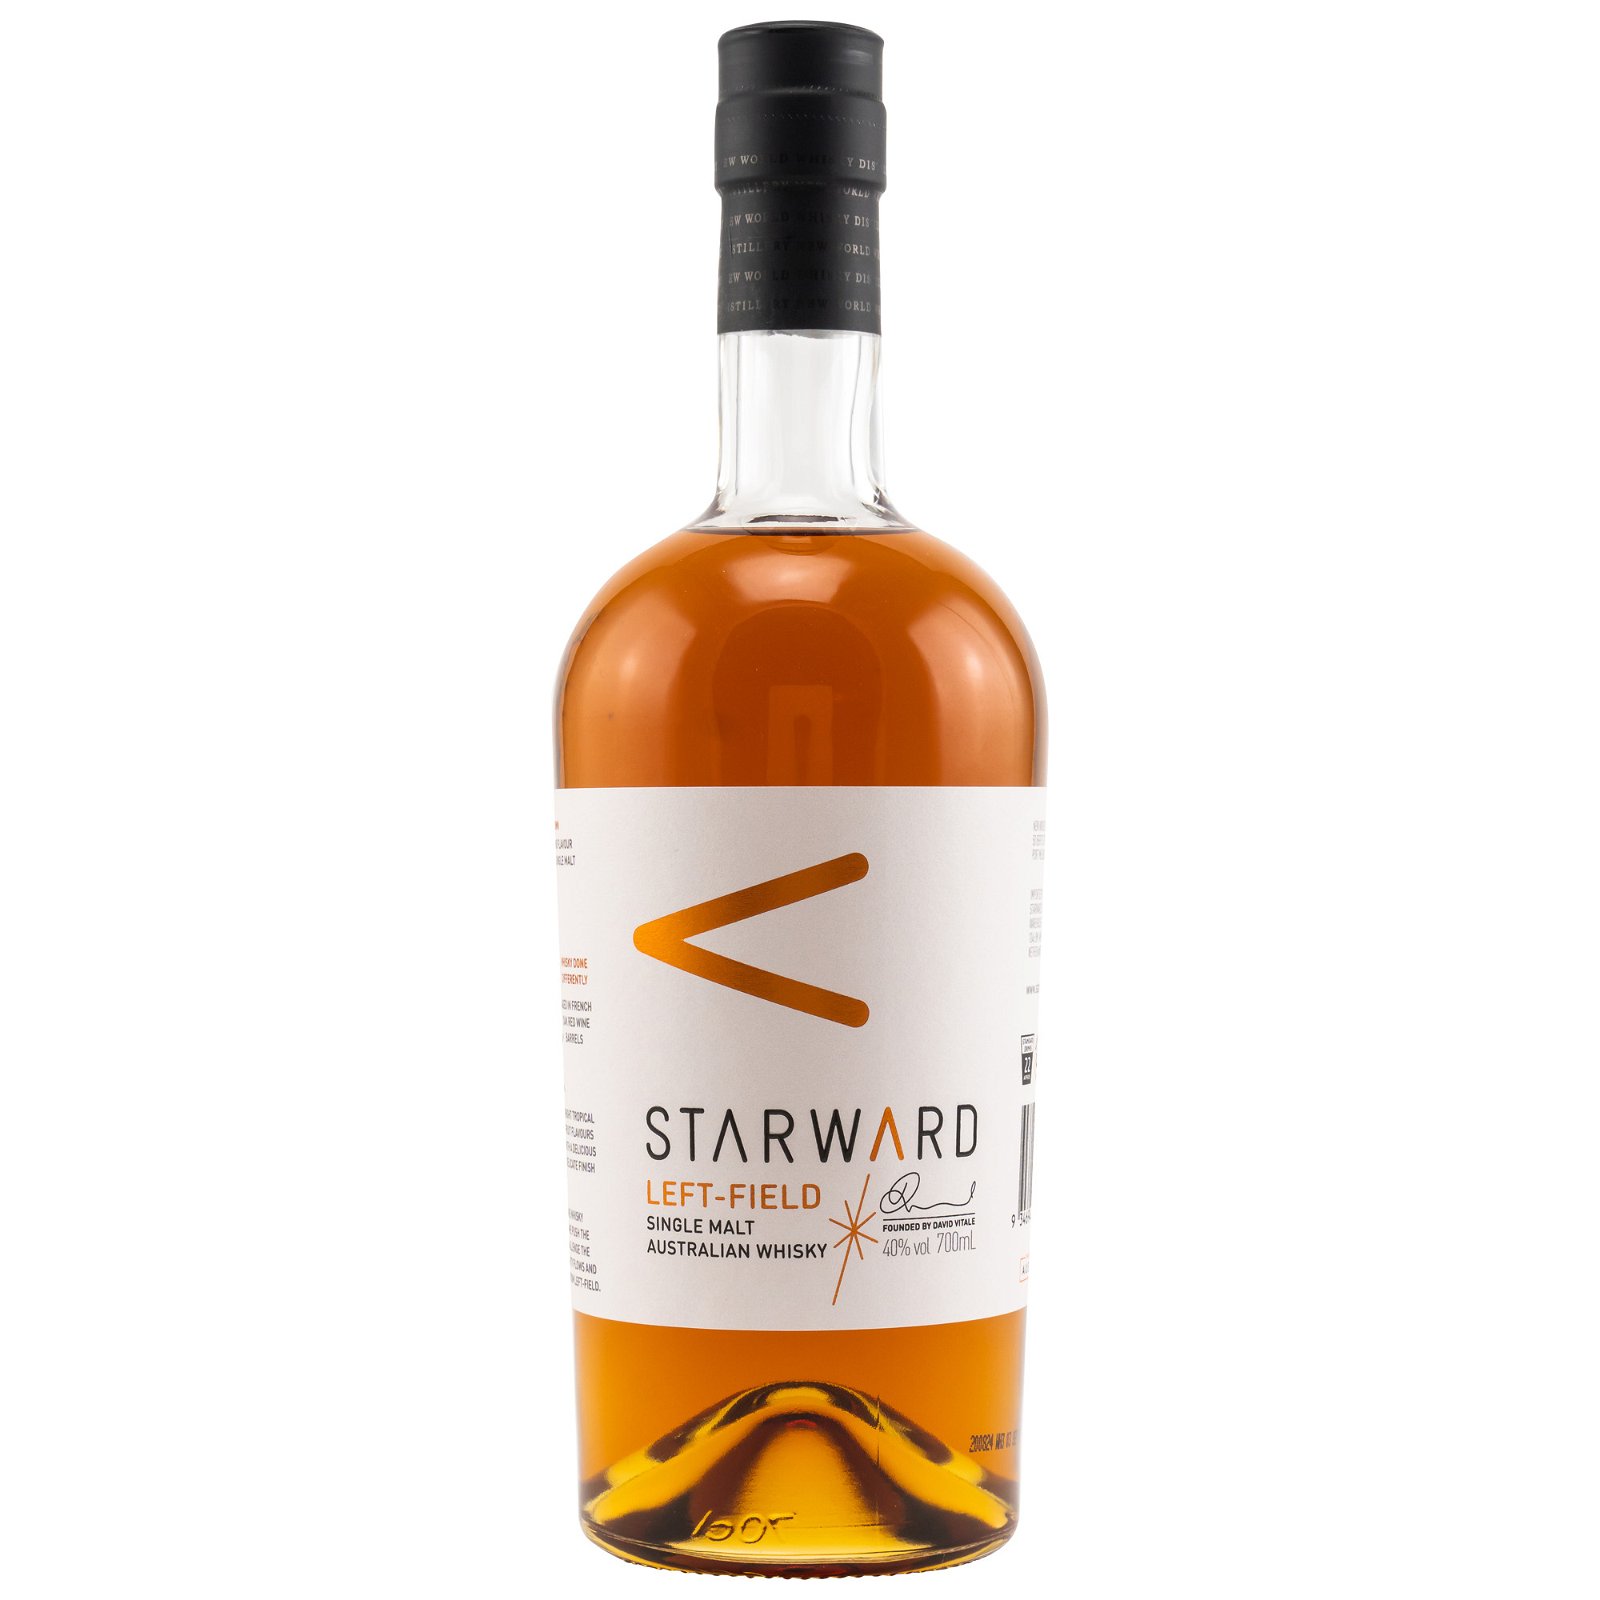 Starward Left-Field - Australian Single Malt Whisky